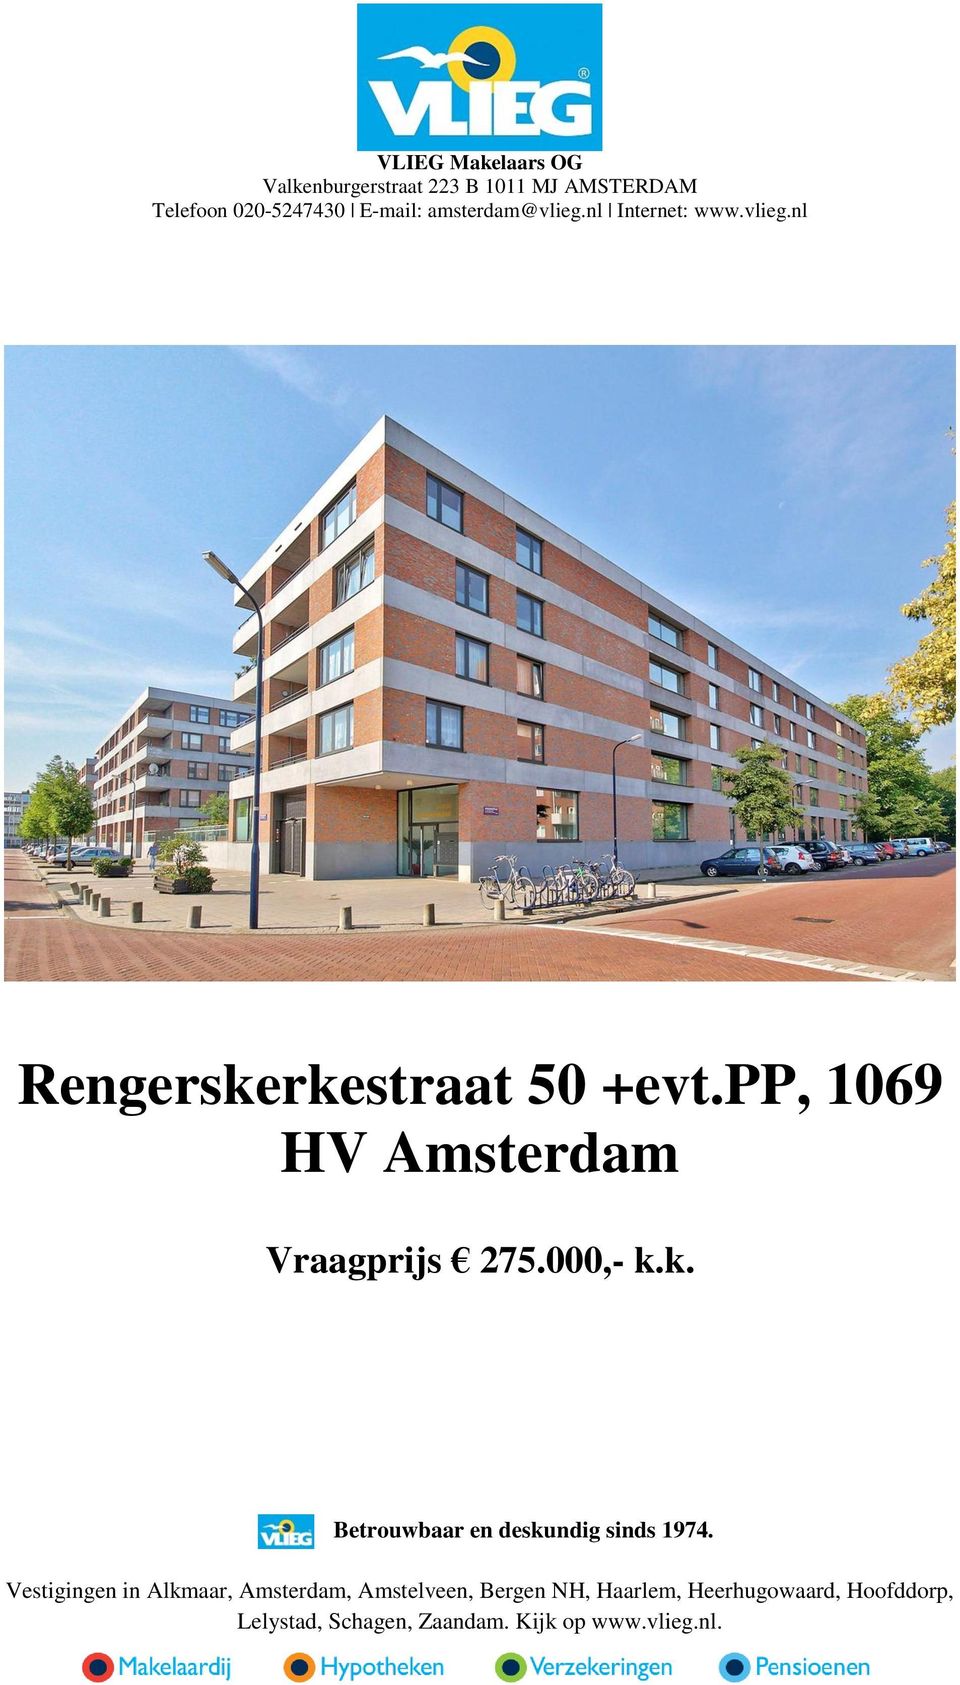 pp, 1069 HV Amsterdam Vraagprijs 275.000, k.